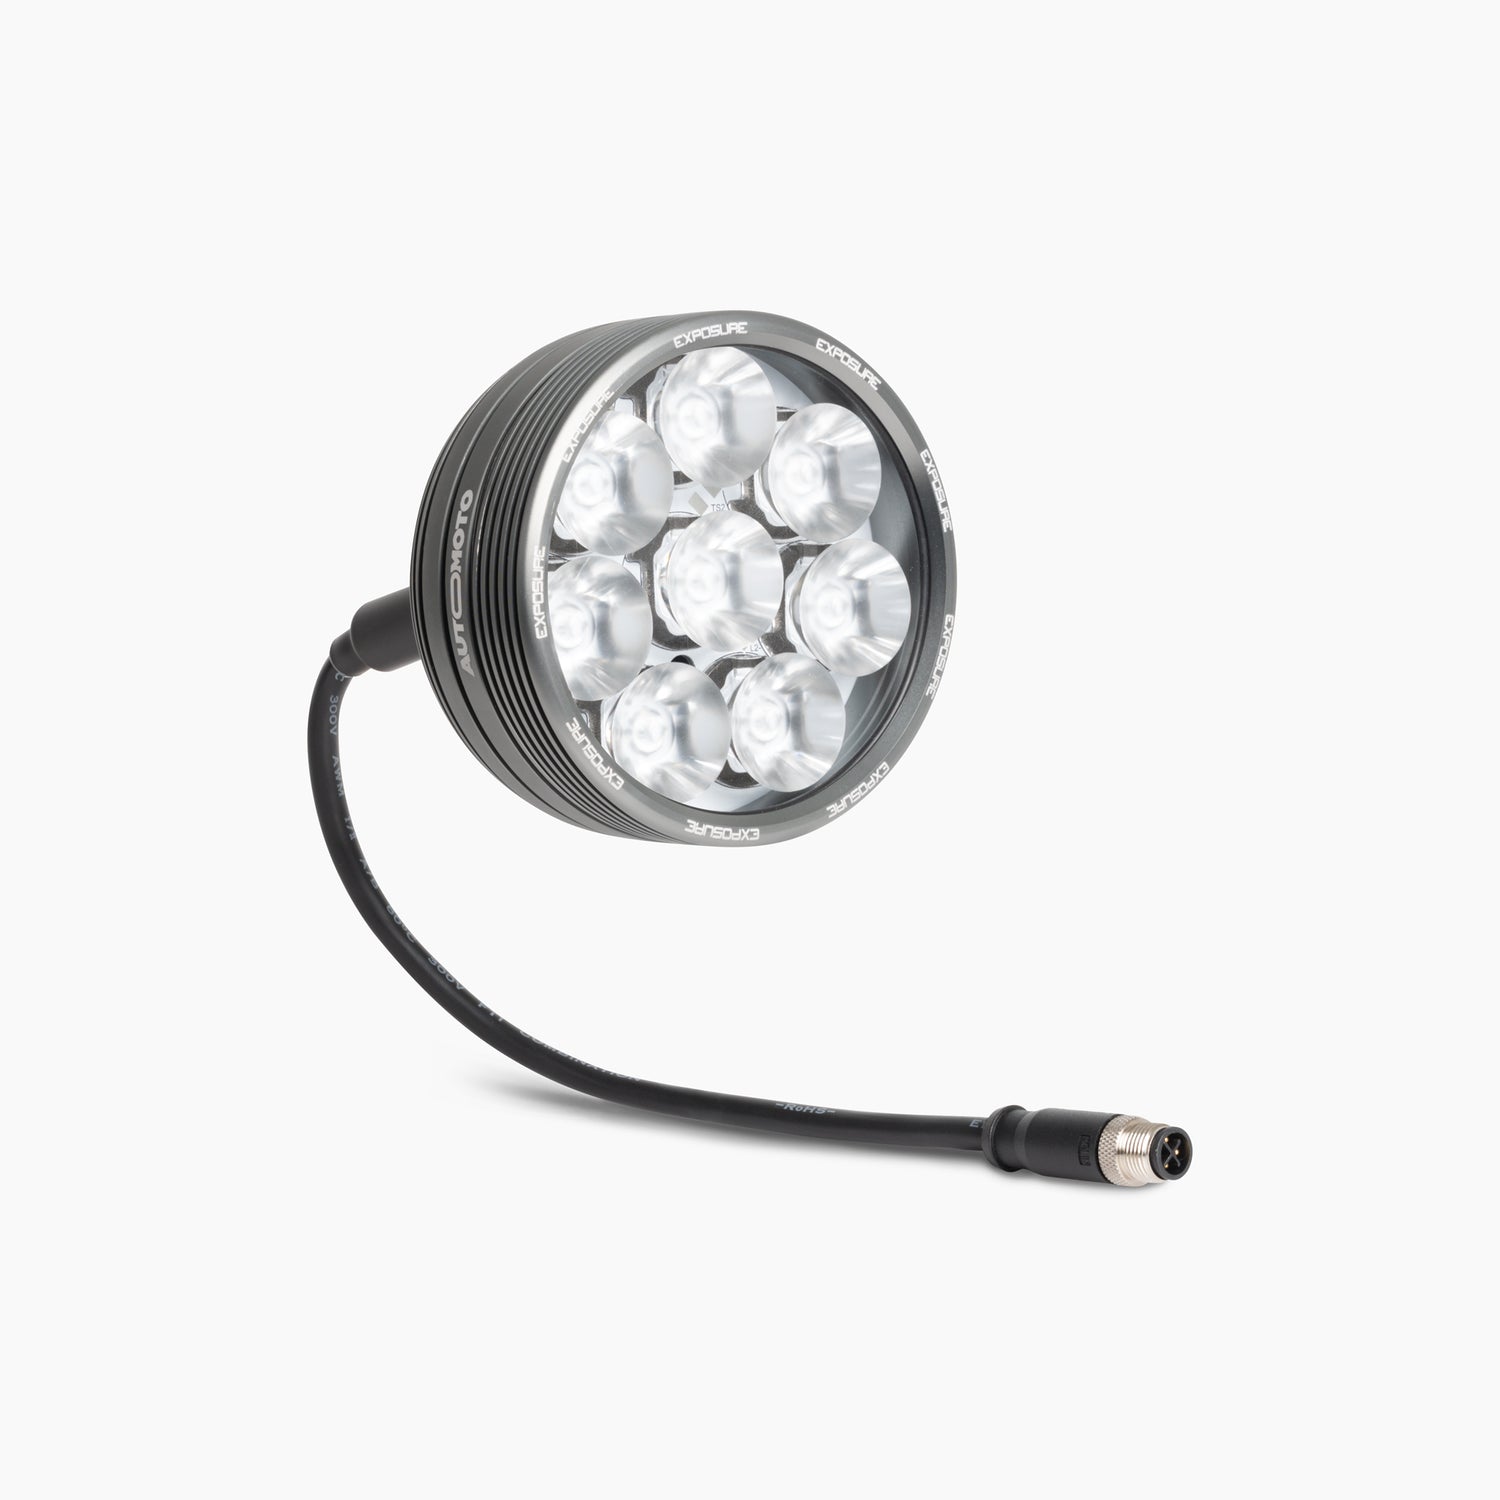 AutoMoto Radial 8 LED Light - 8 Spotlight Lenses